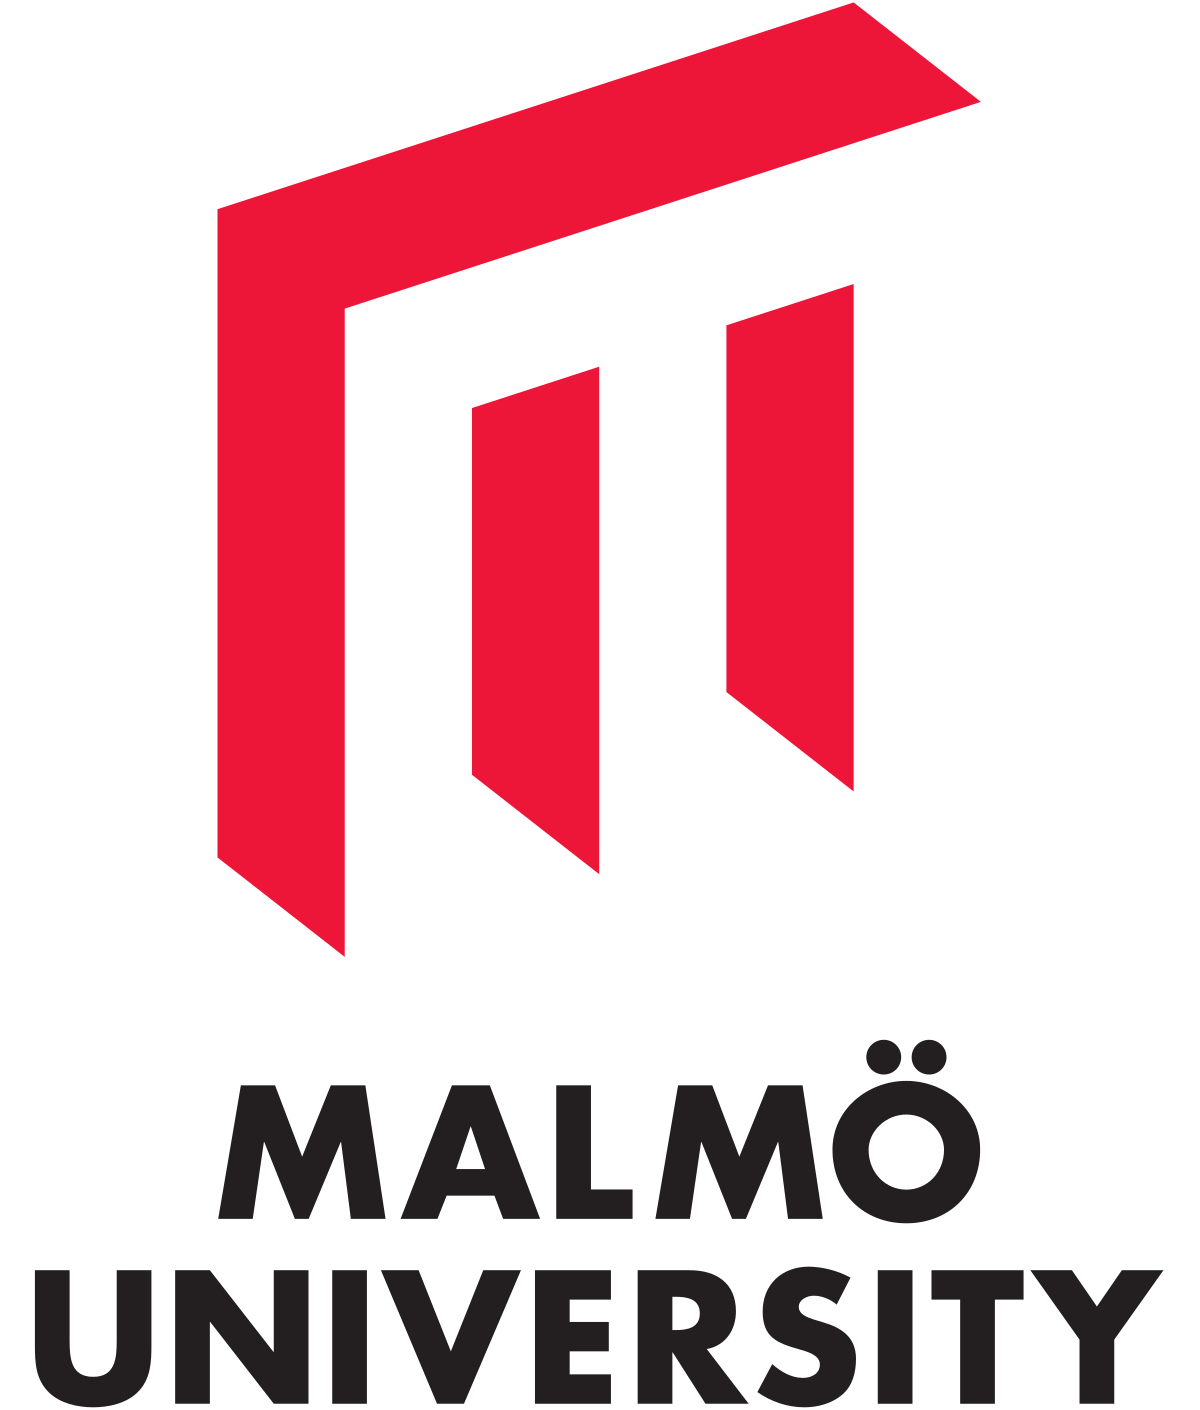 MalmÃ¶ University